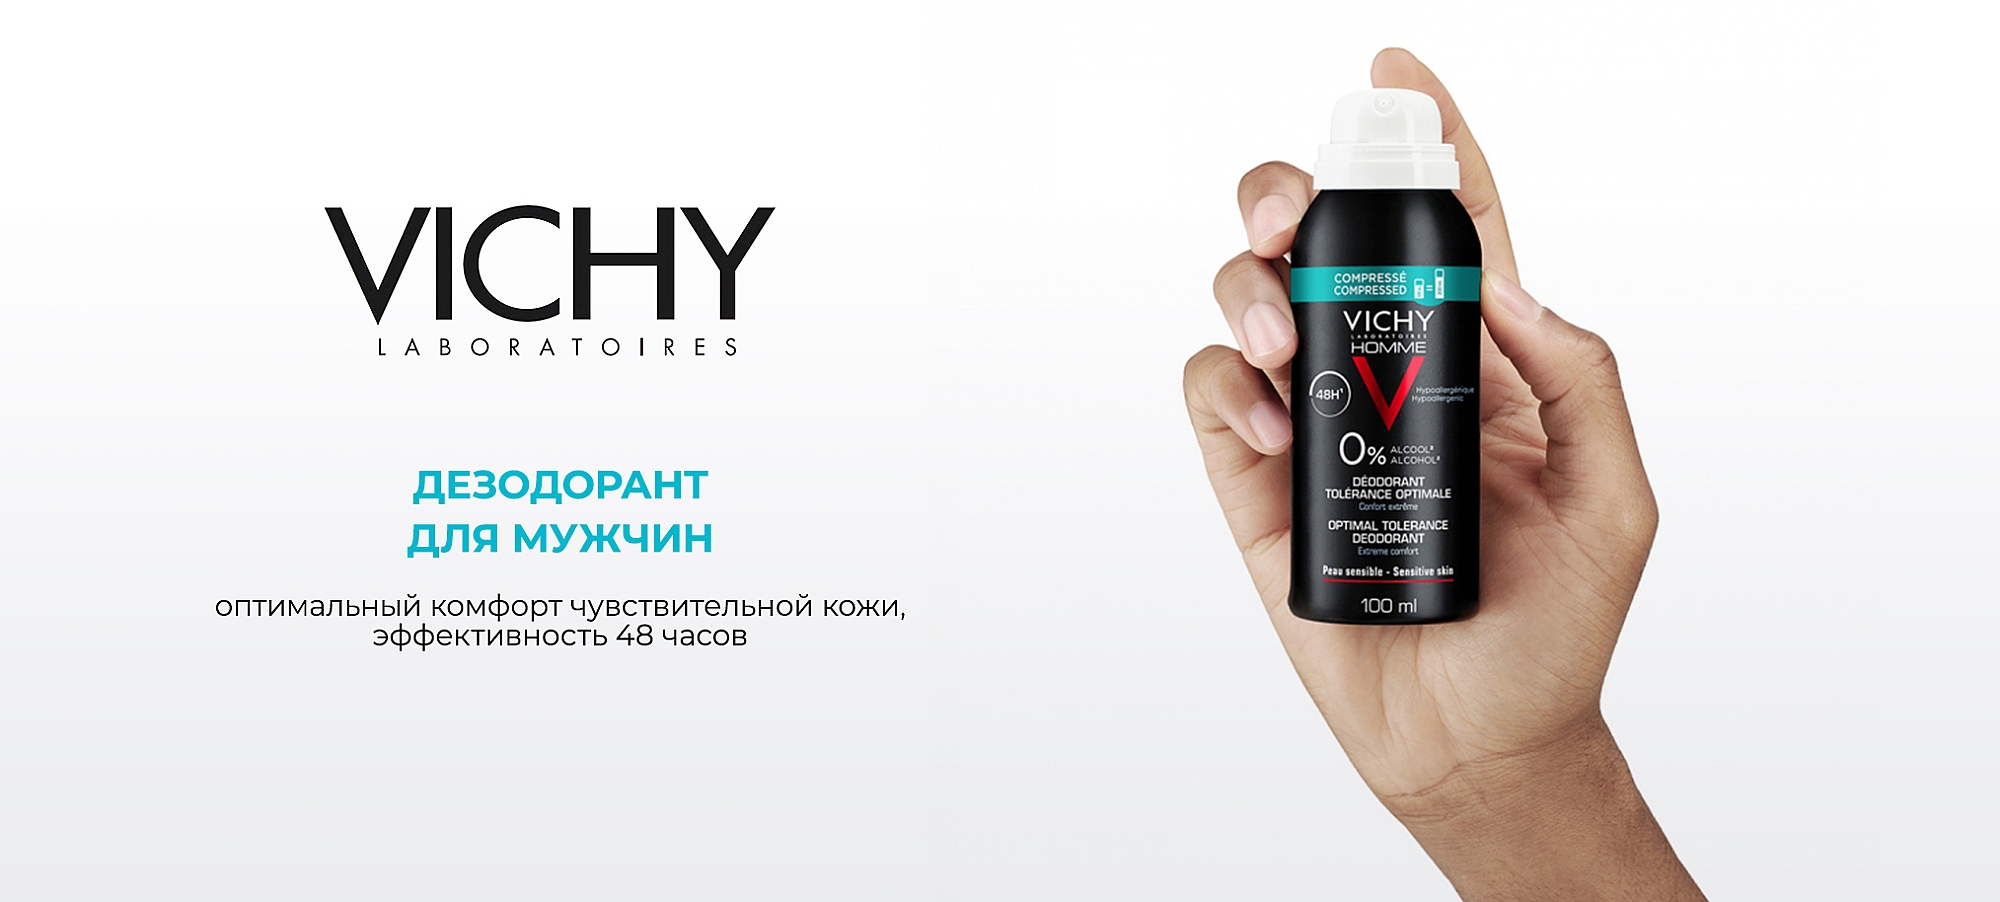 Vichy Optimal Tolerance Deodorant 48H